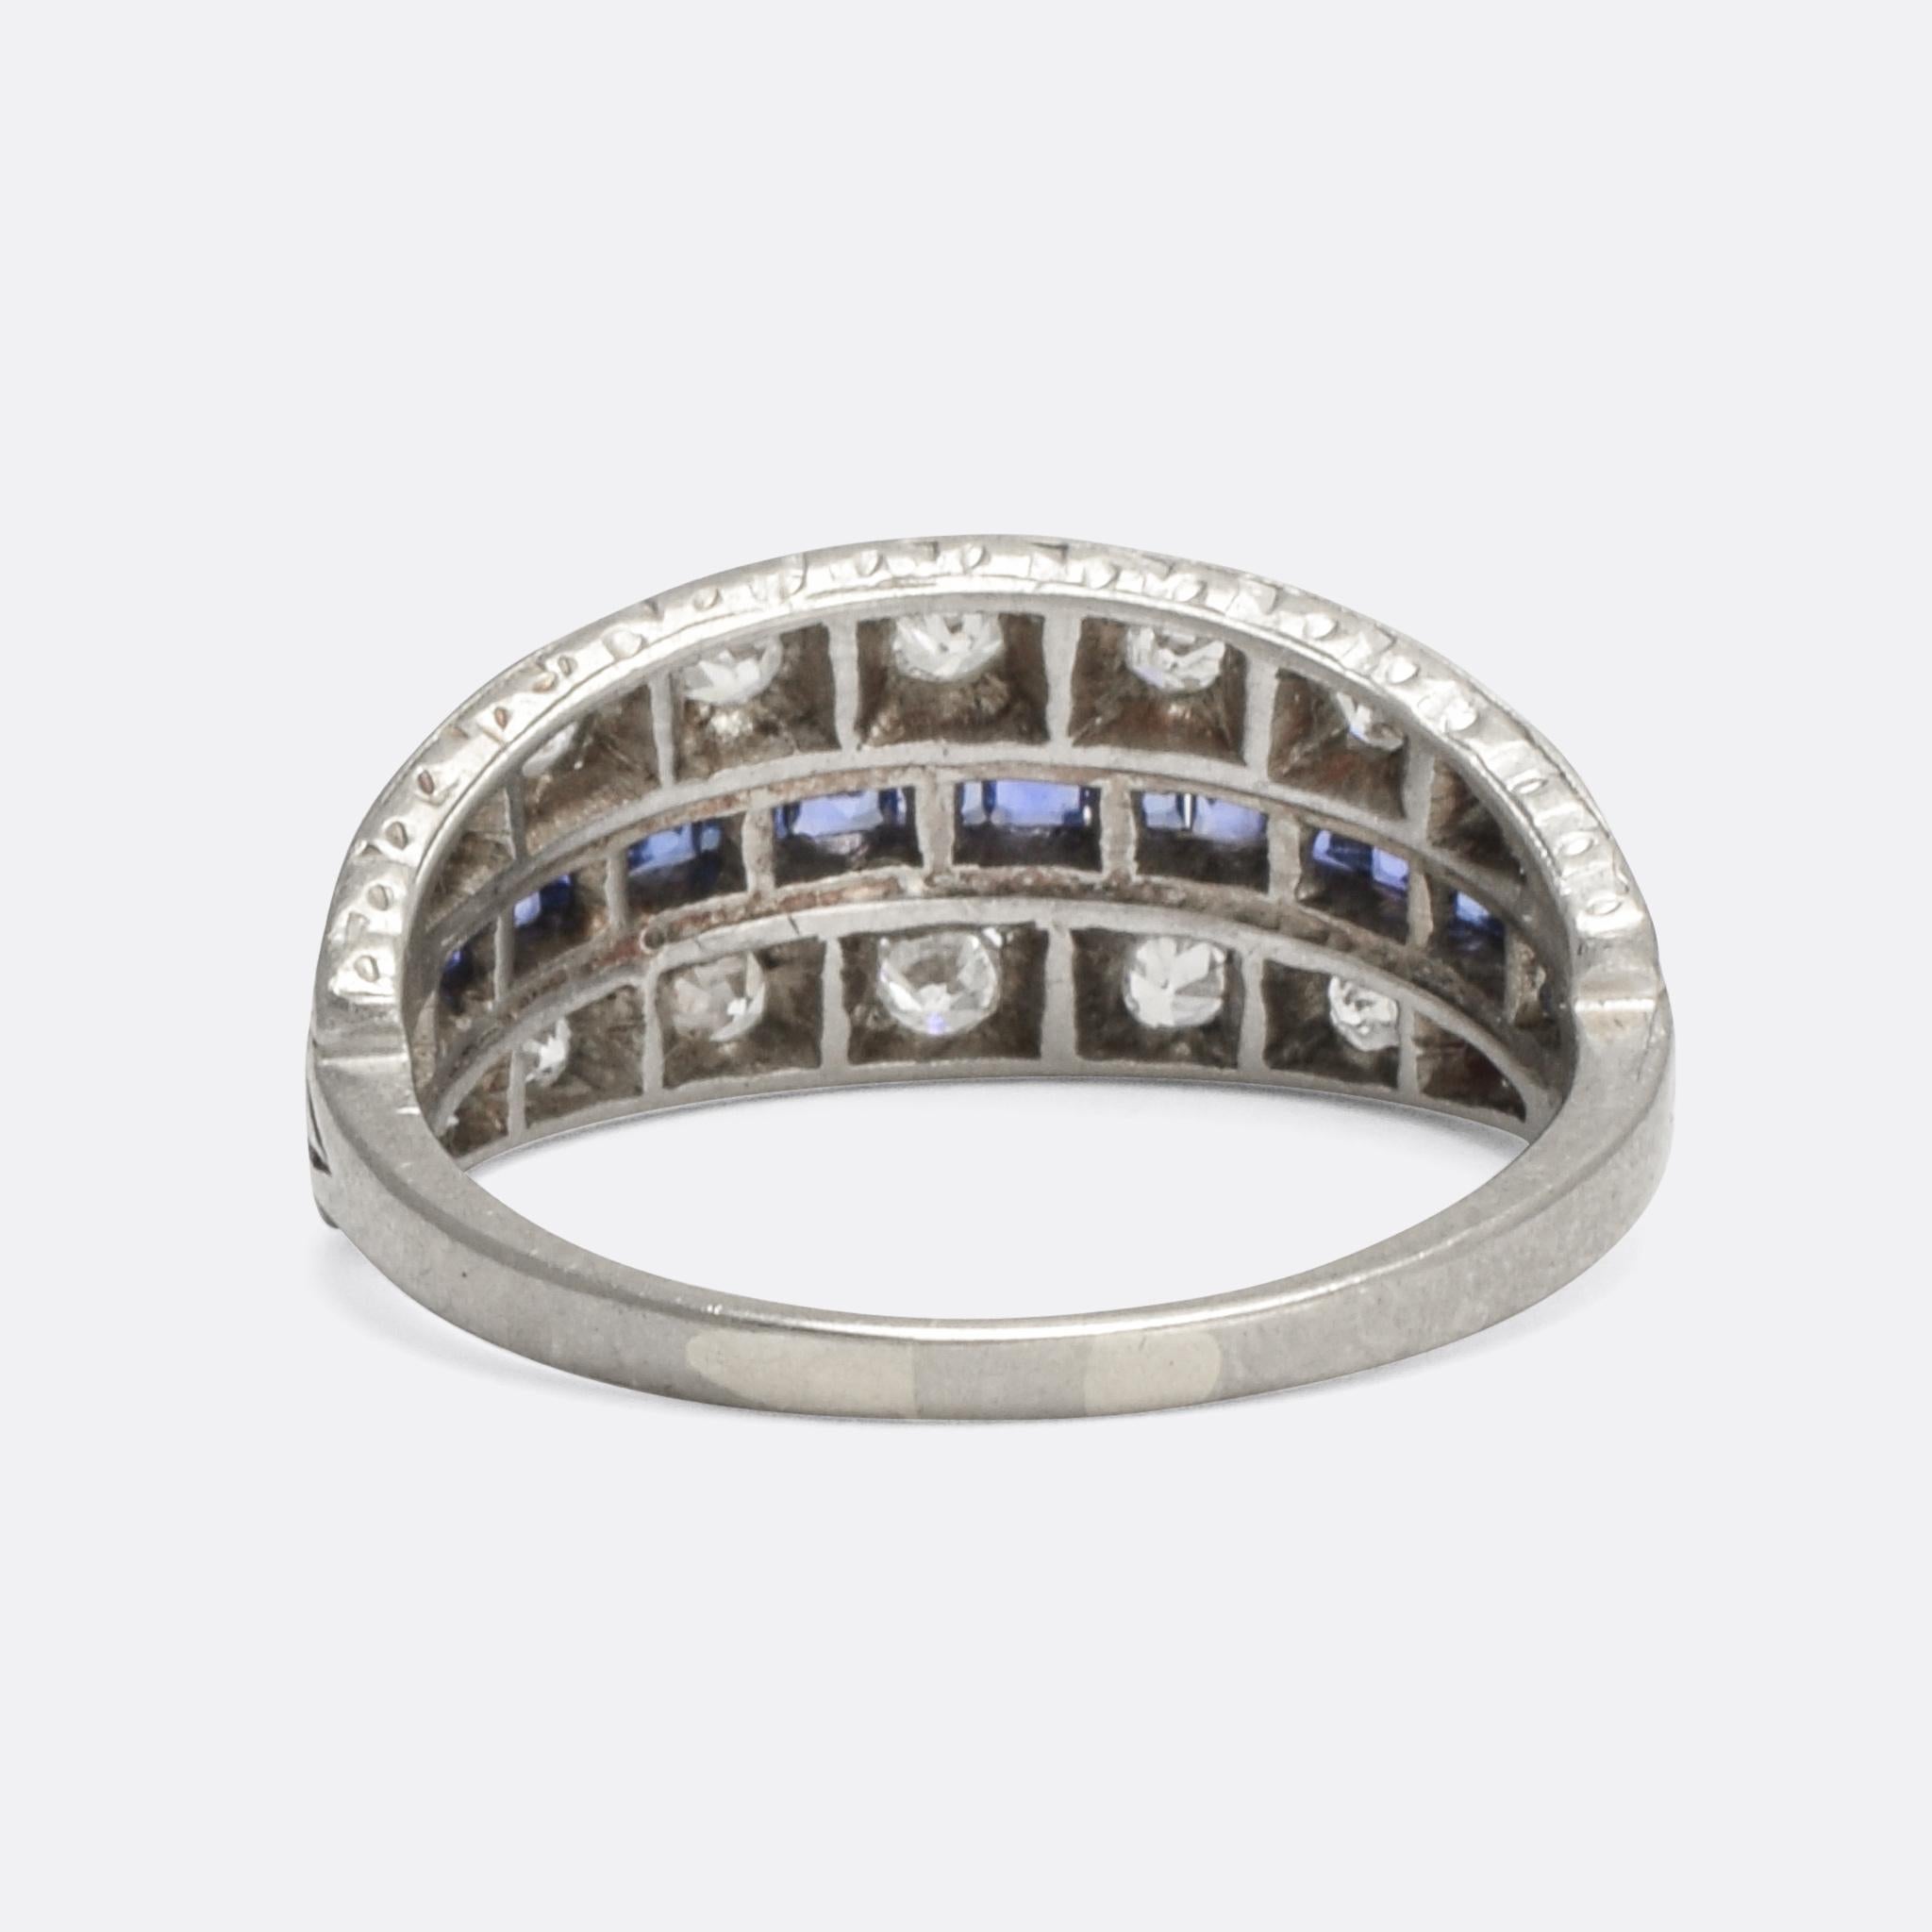 Women's Art Deco, circa 1920 Sapphire Diamond Seam Ring